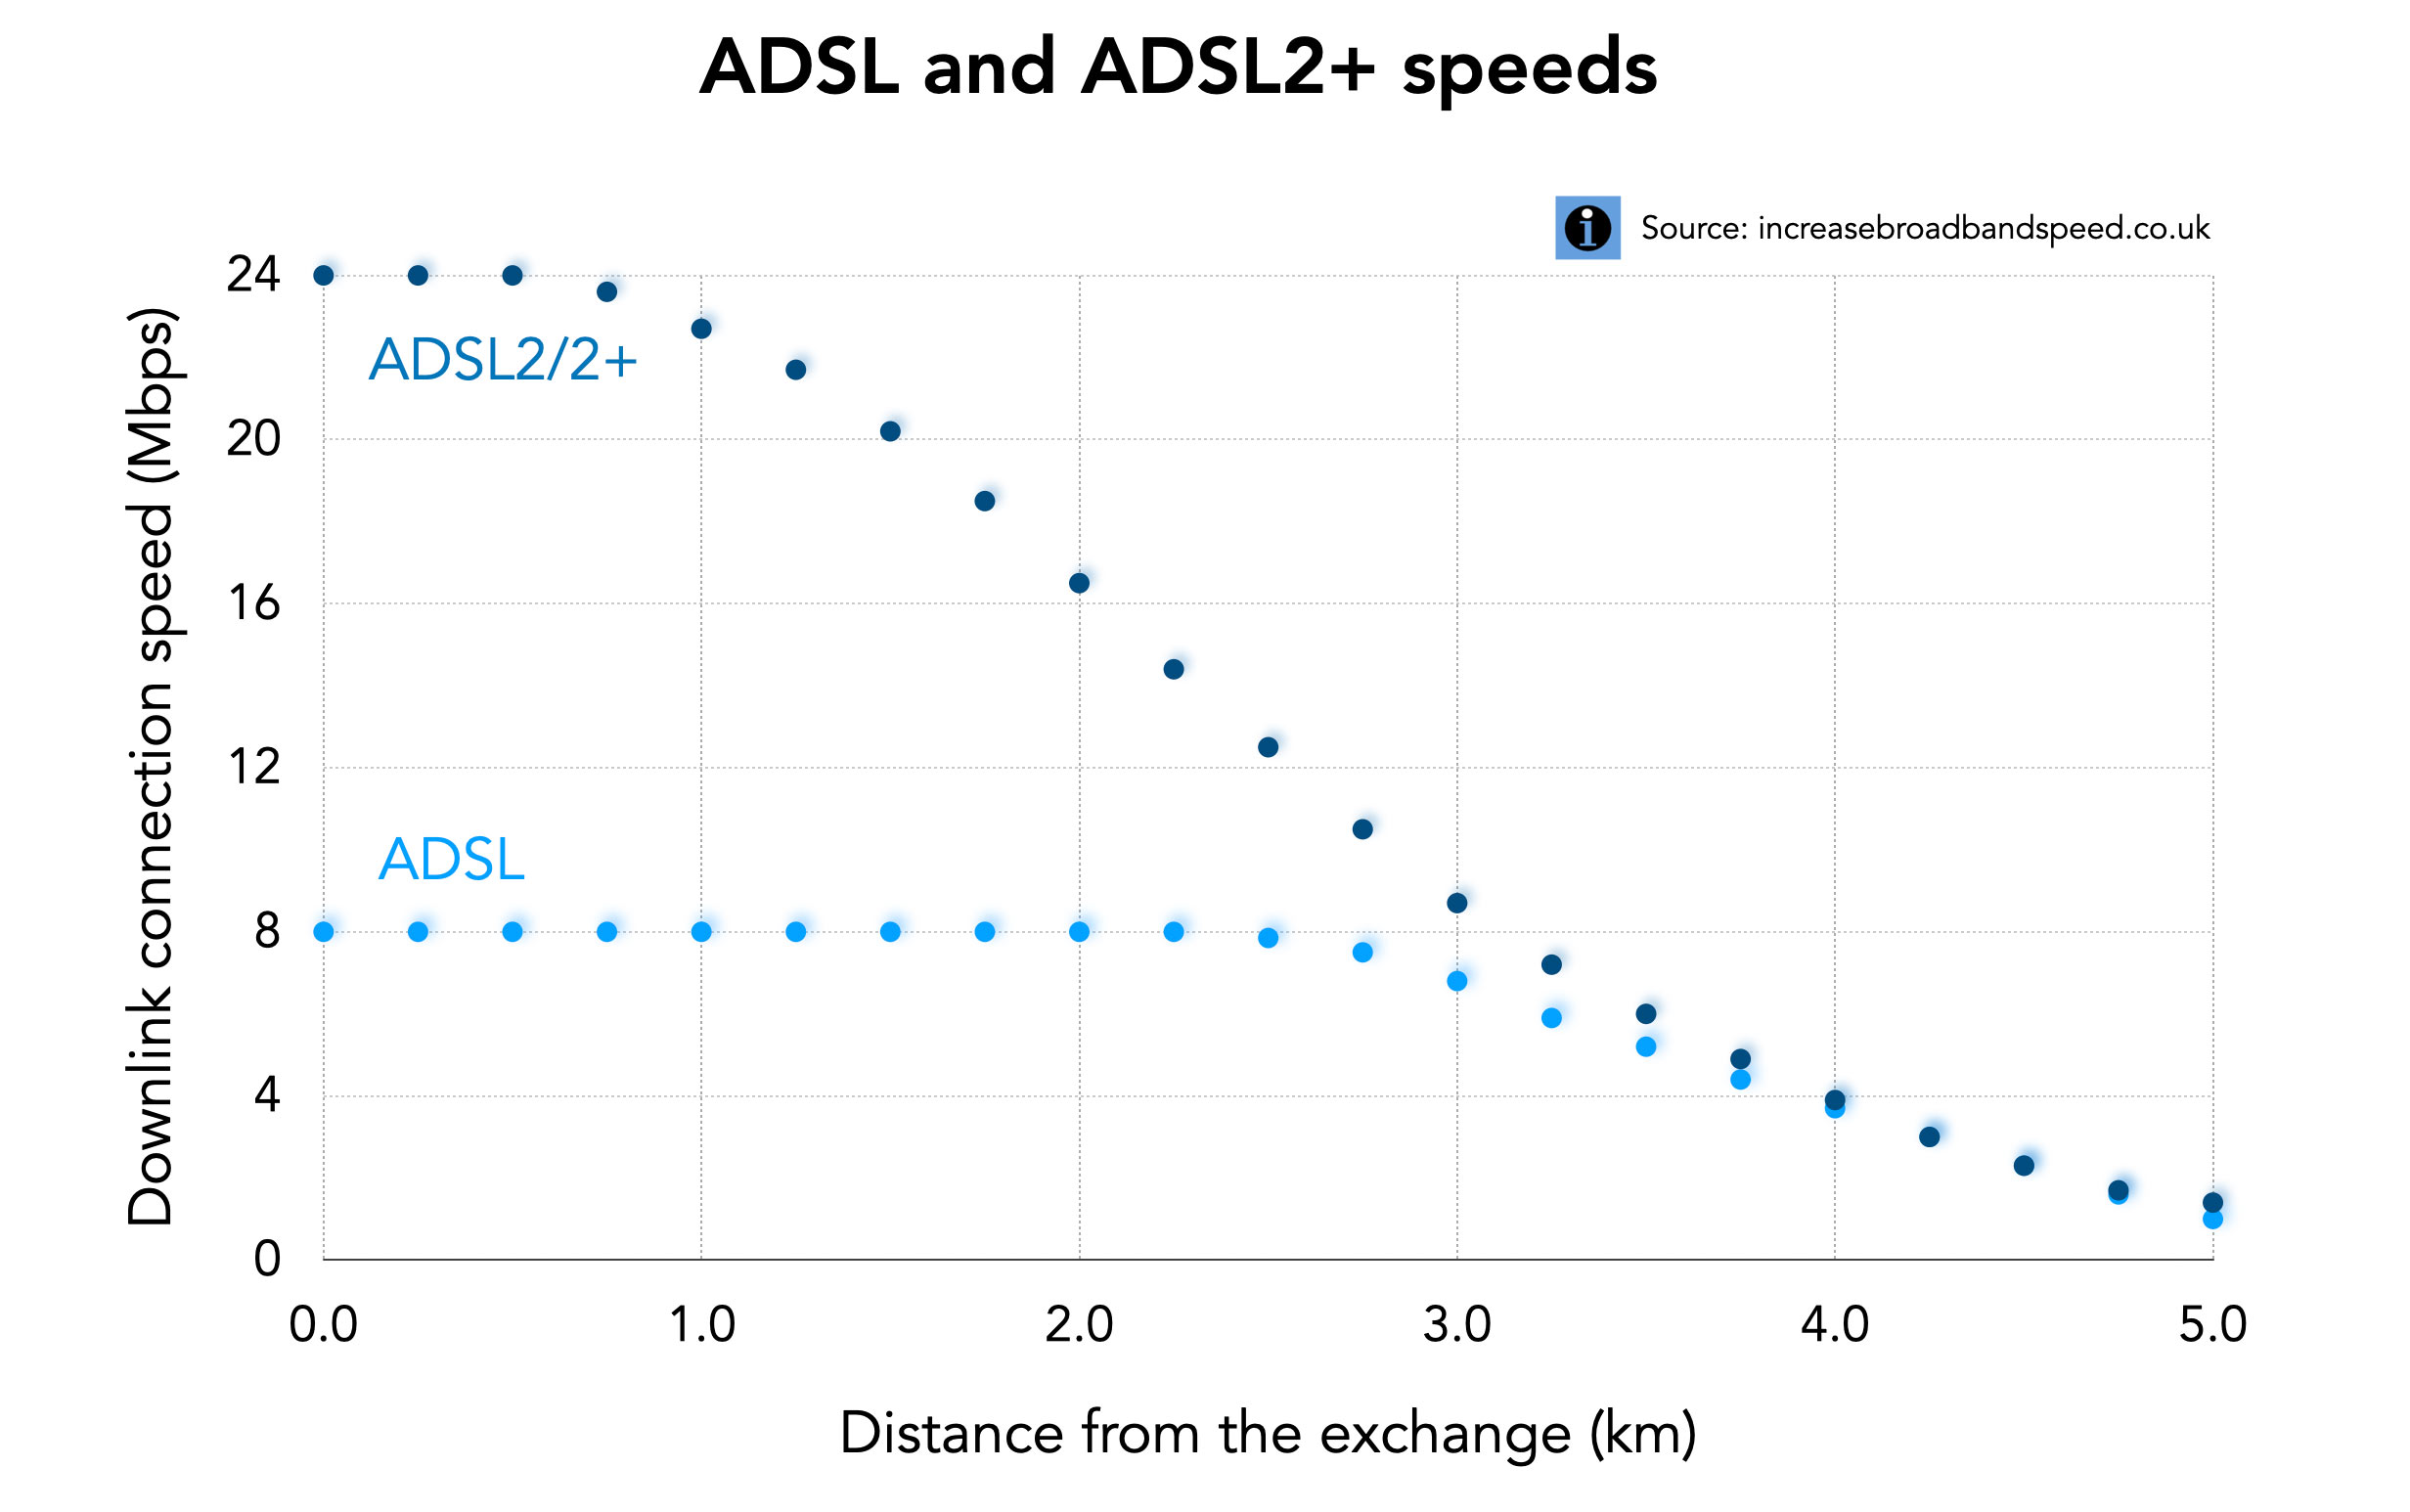 ADSL versus ADSL2+ speeds